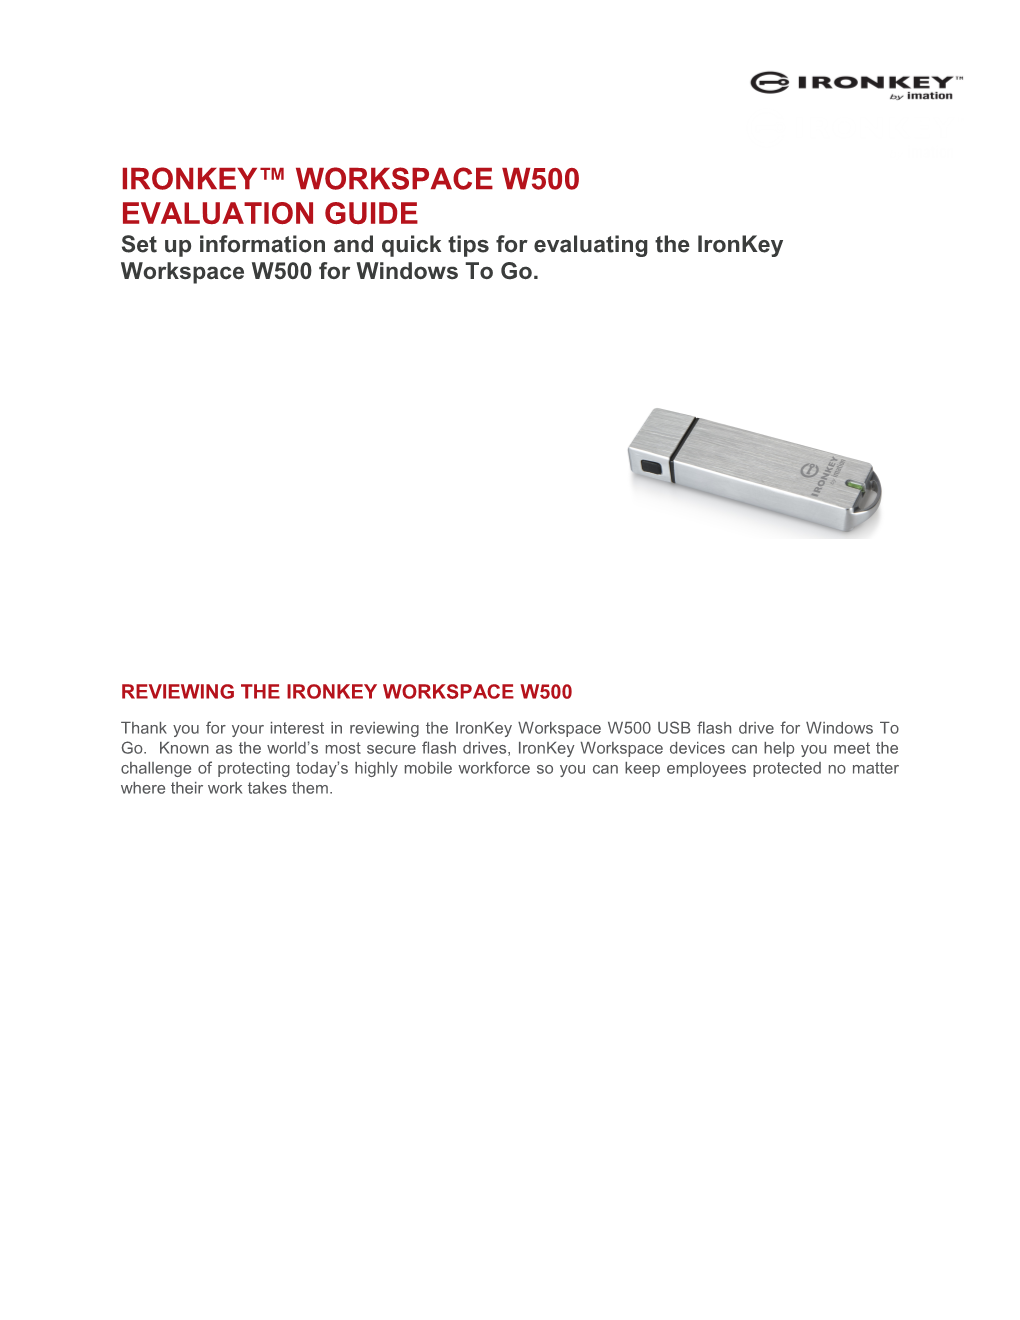 Ironkey Workspace W500 Evaluation Guide